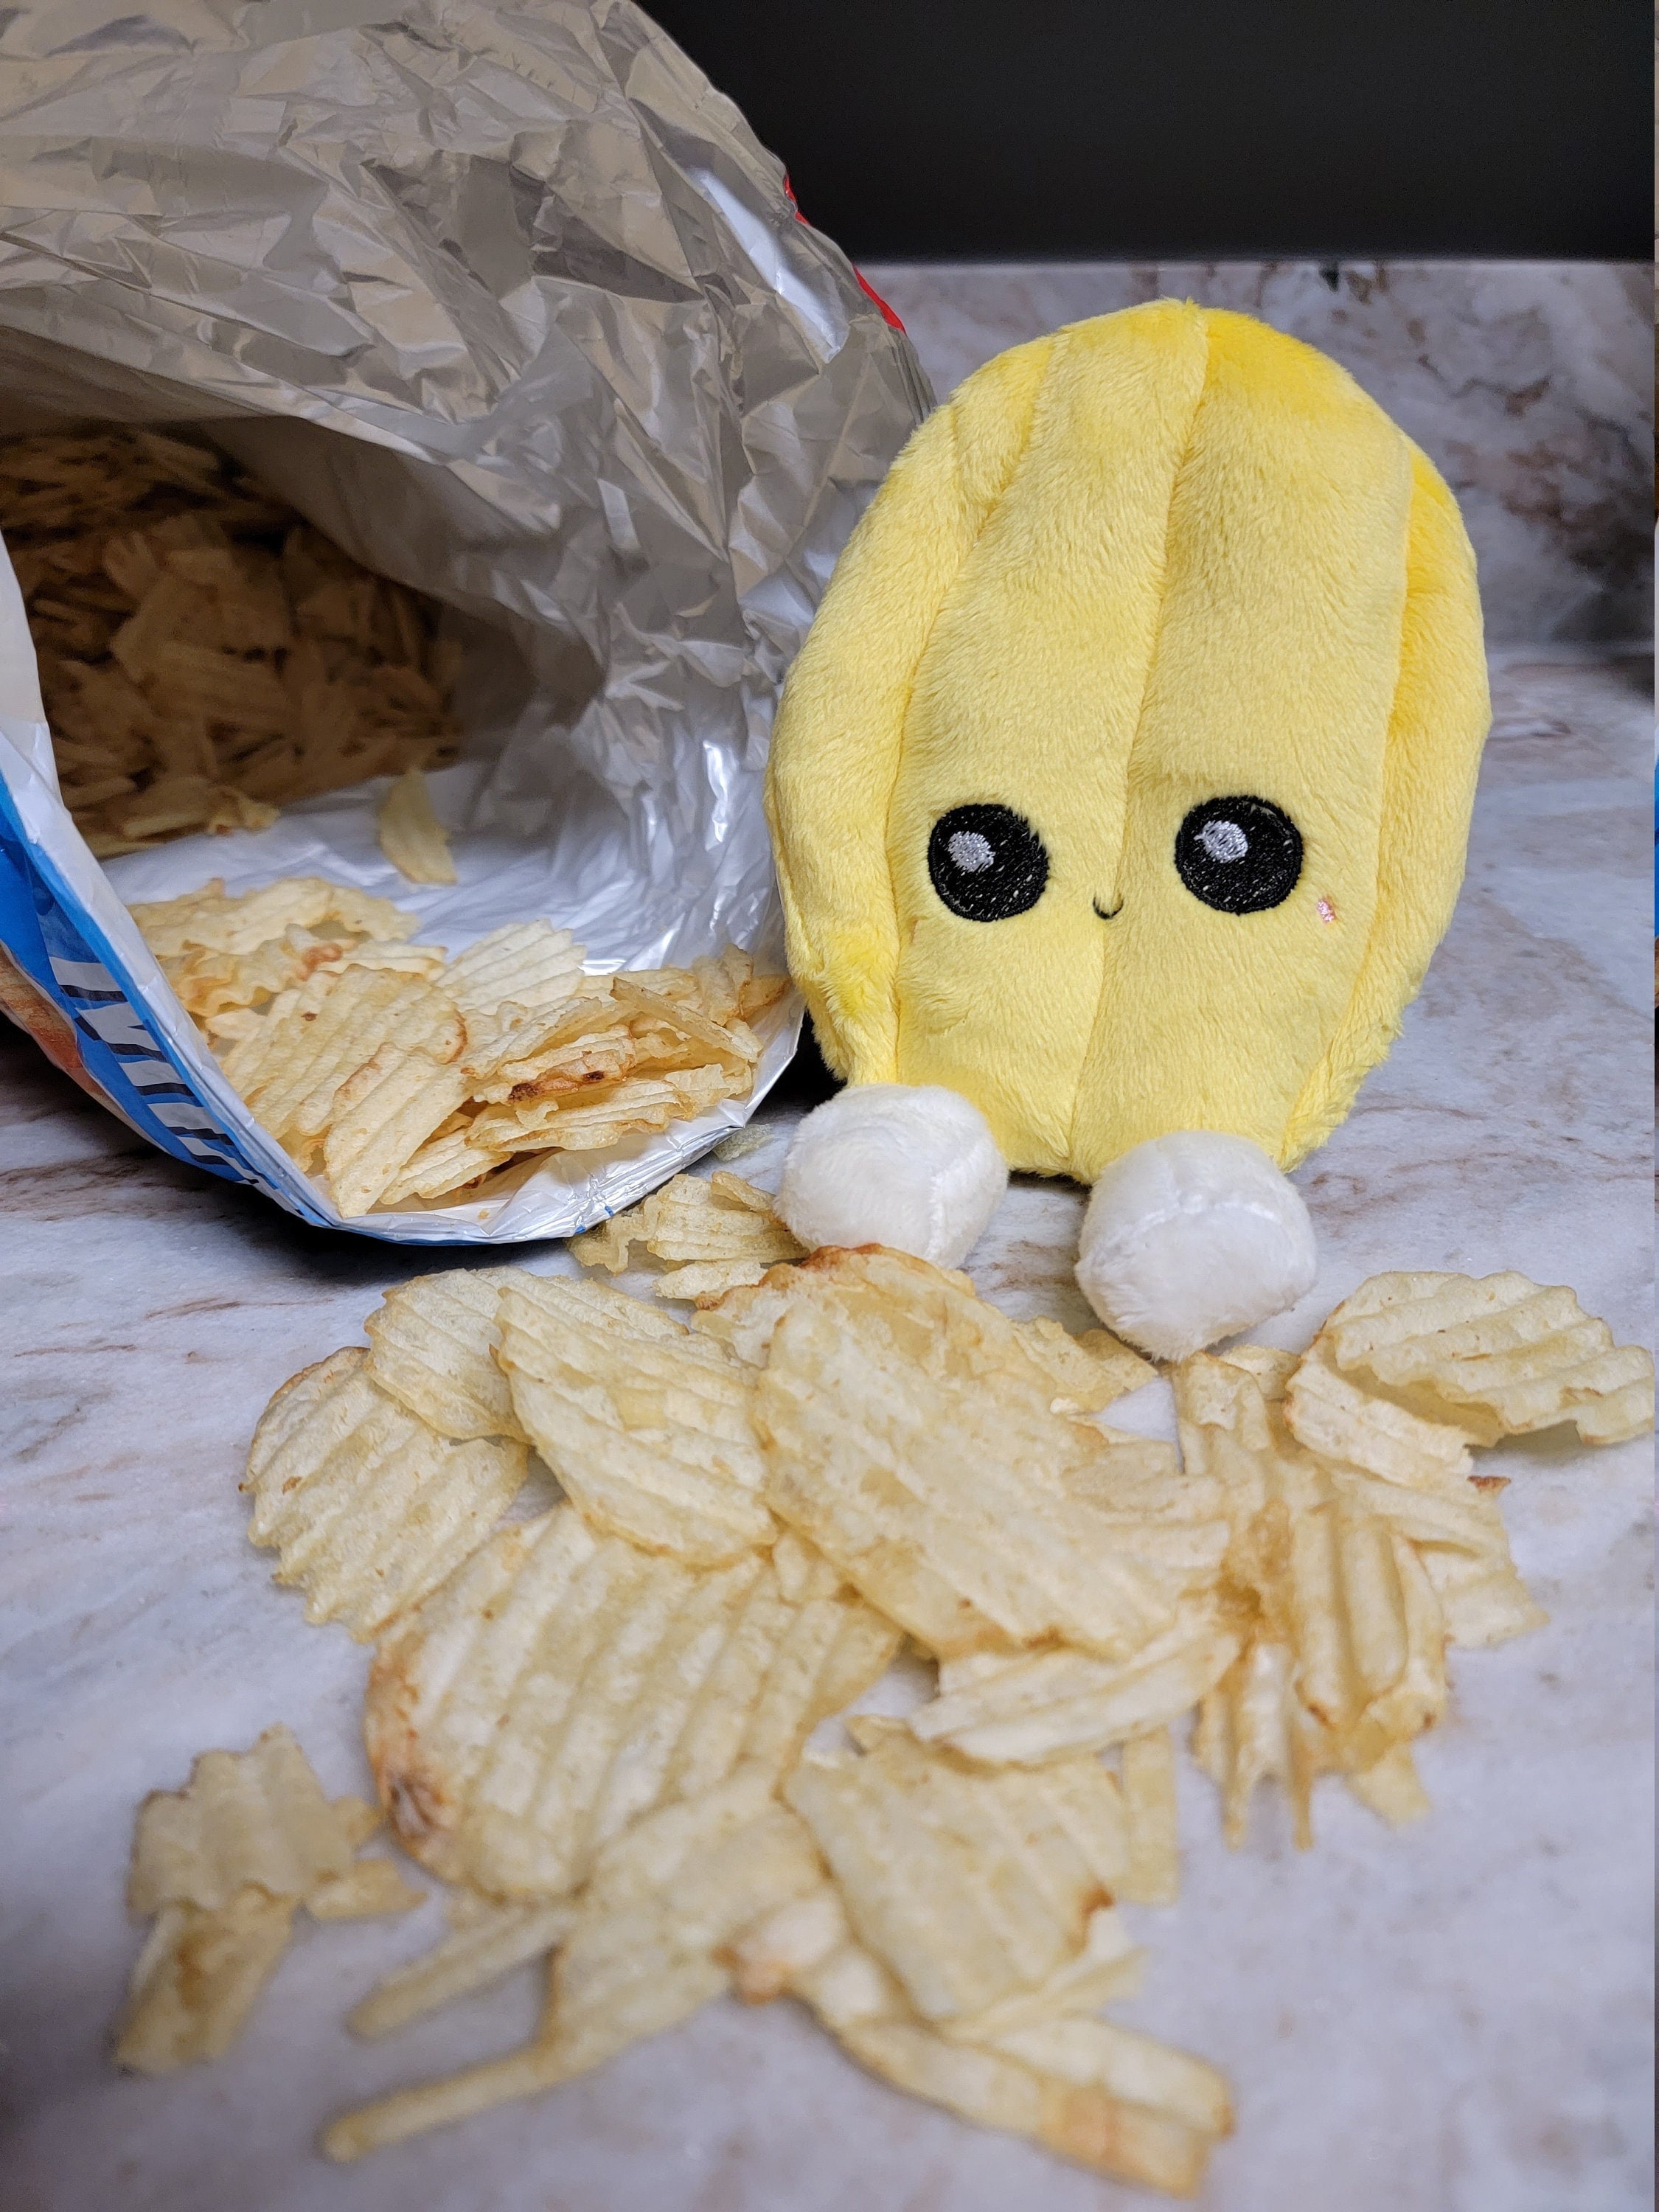 Chip Potato Stuffed Animal, Potato Chips Plush Toy, Chip Potato Pug